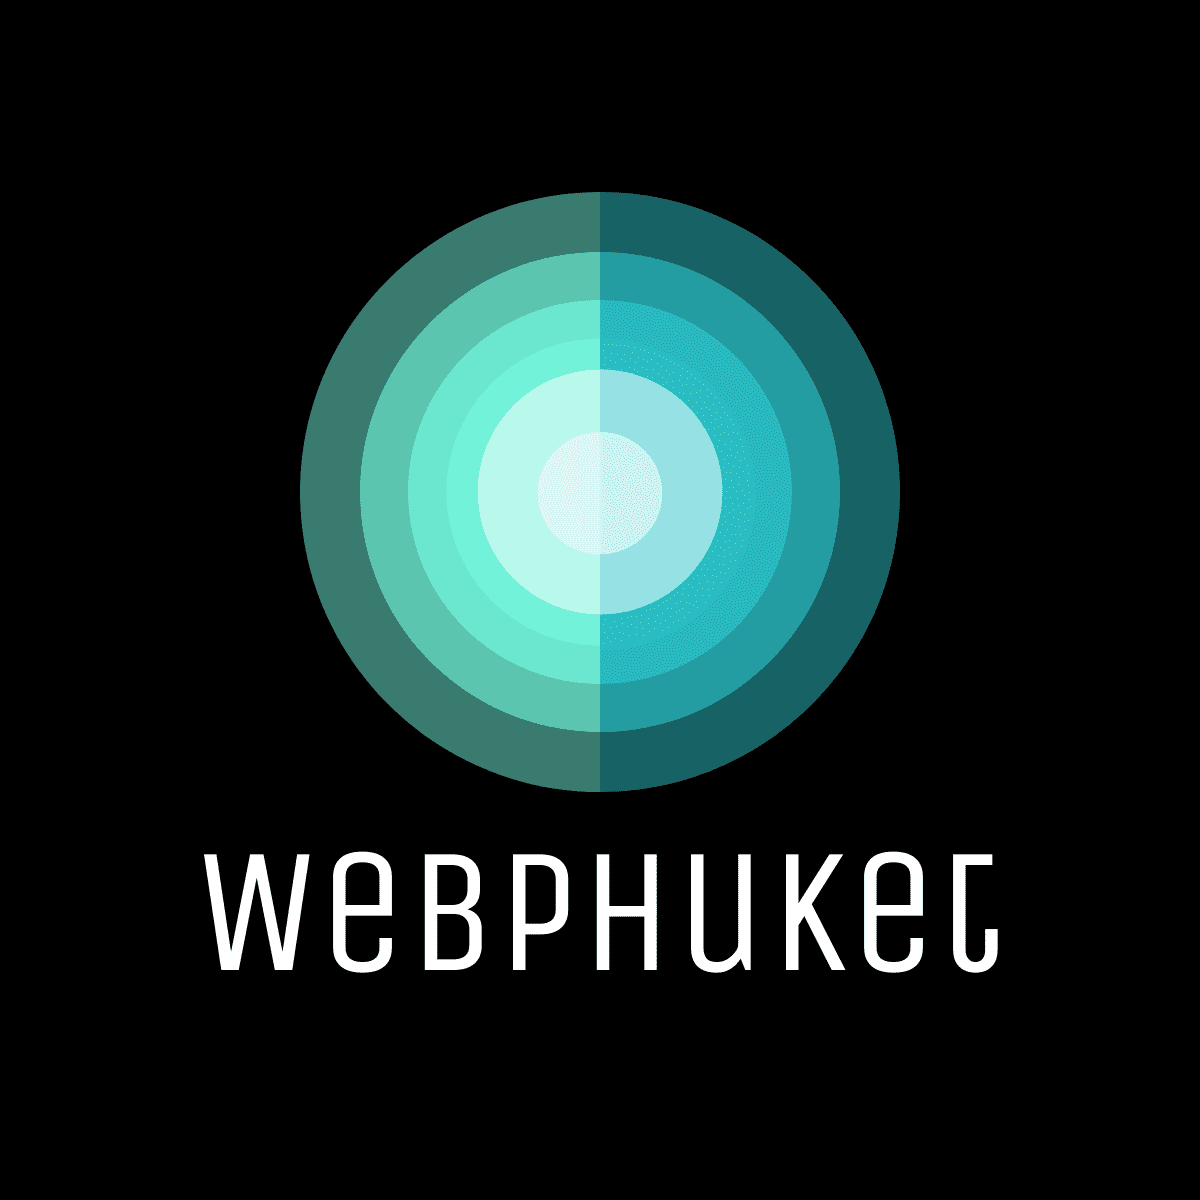 WebPhuket